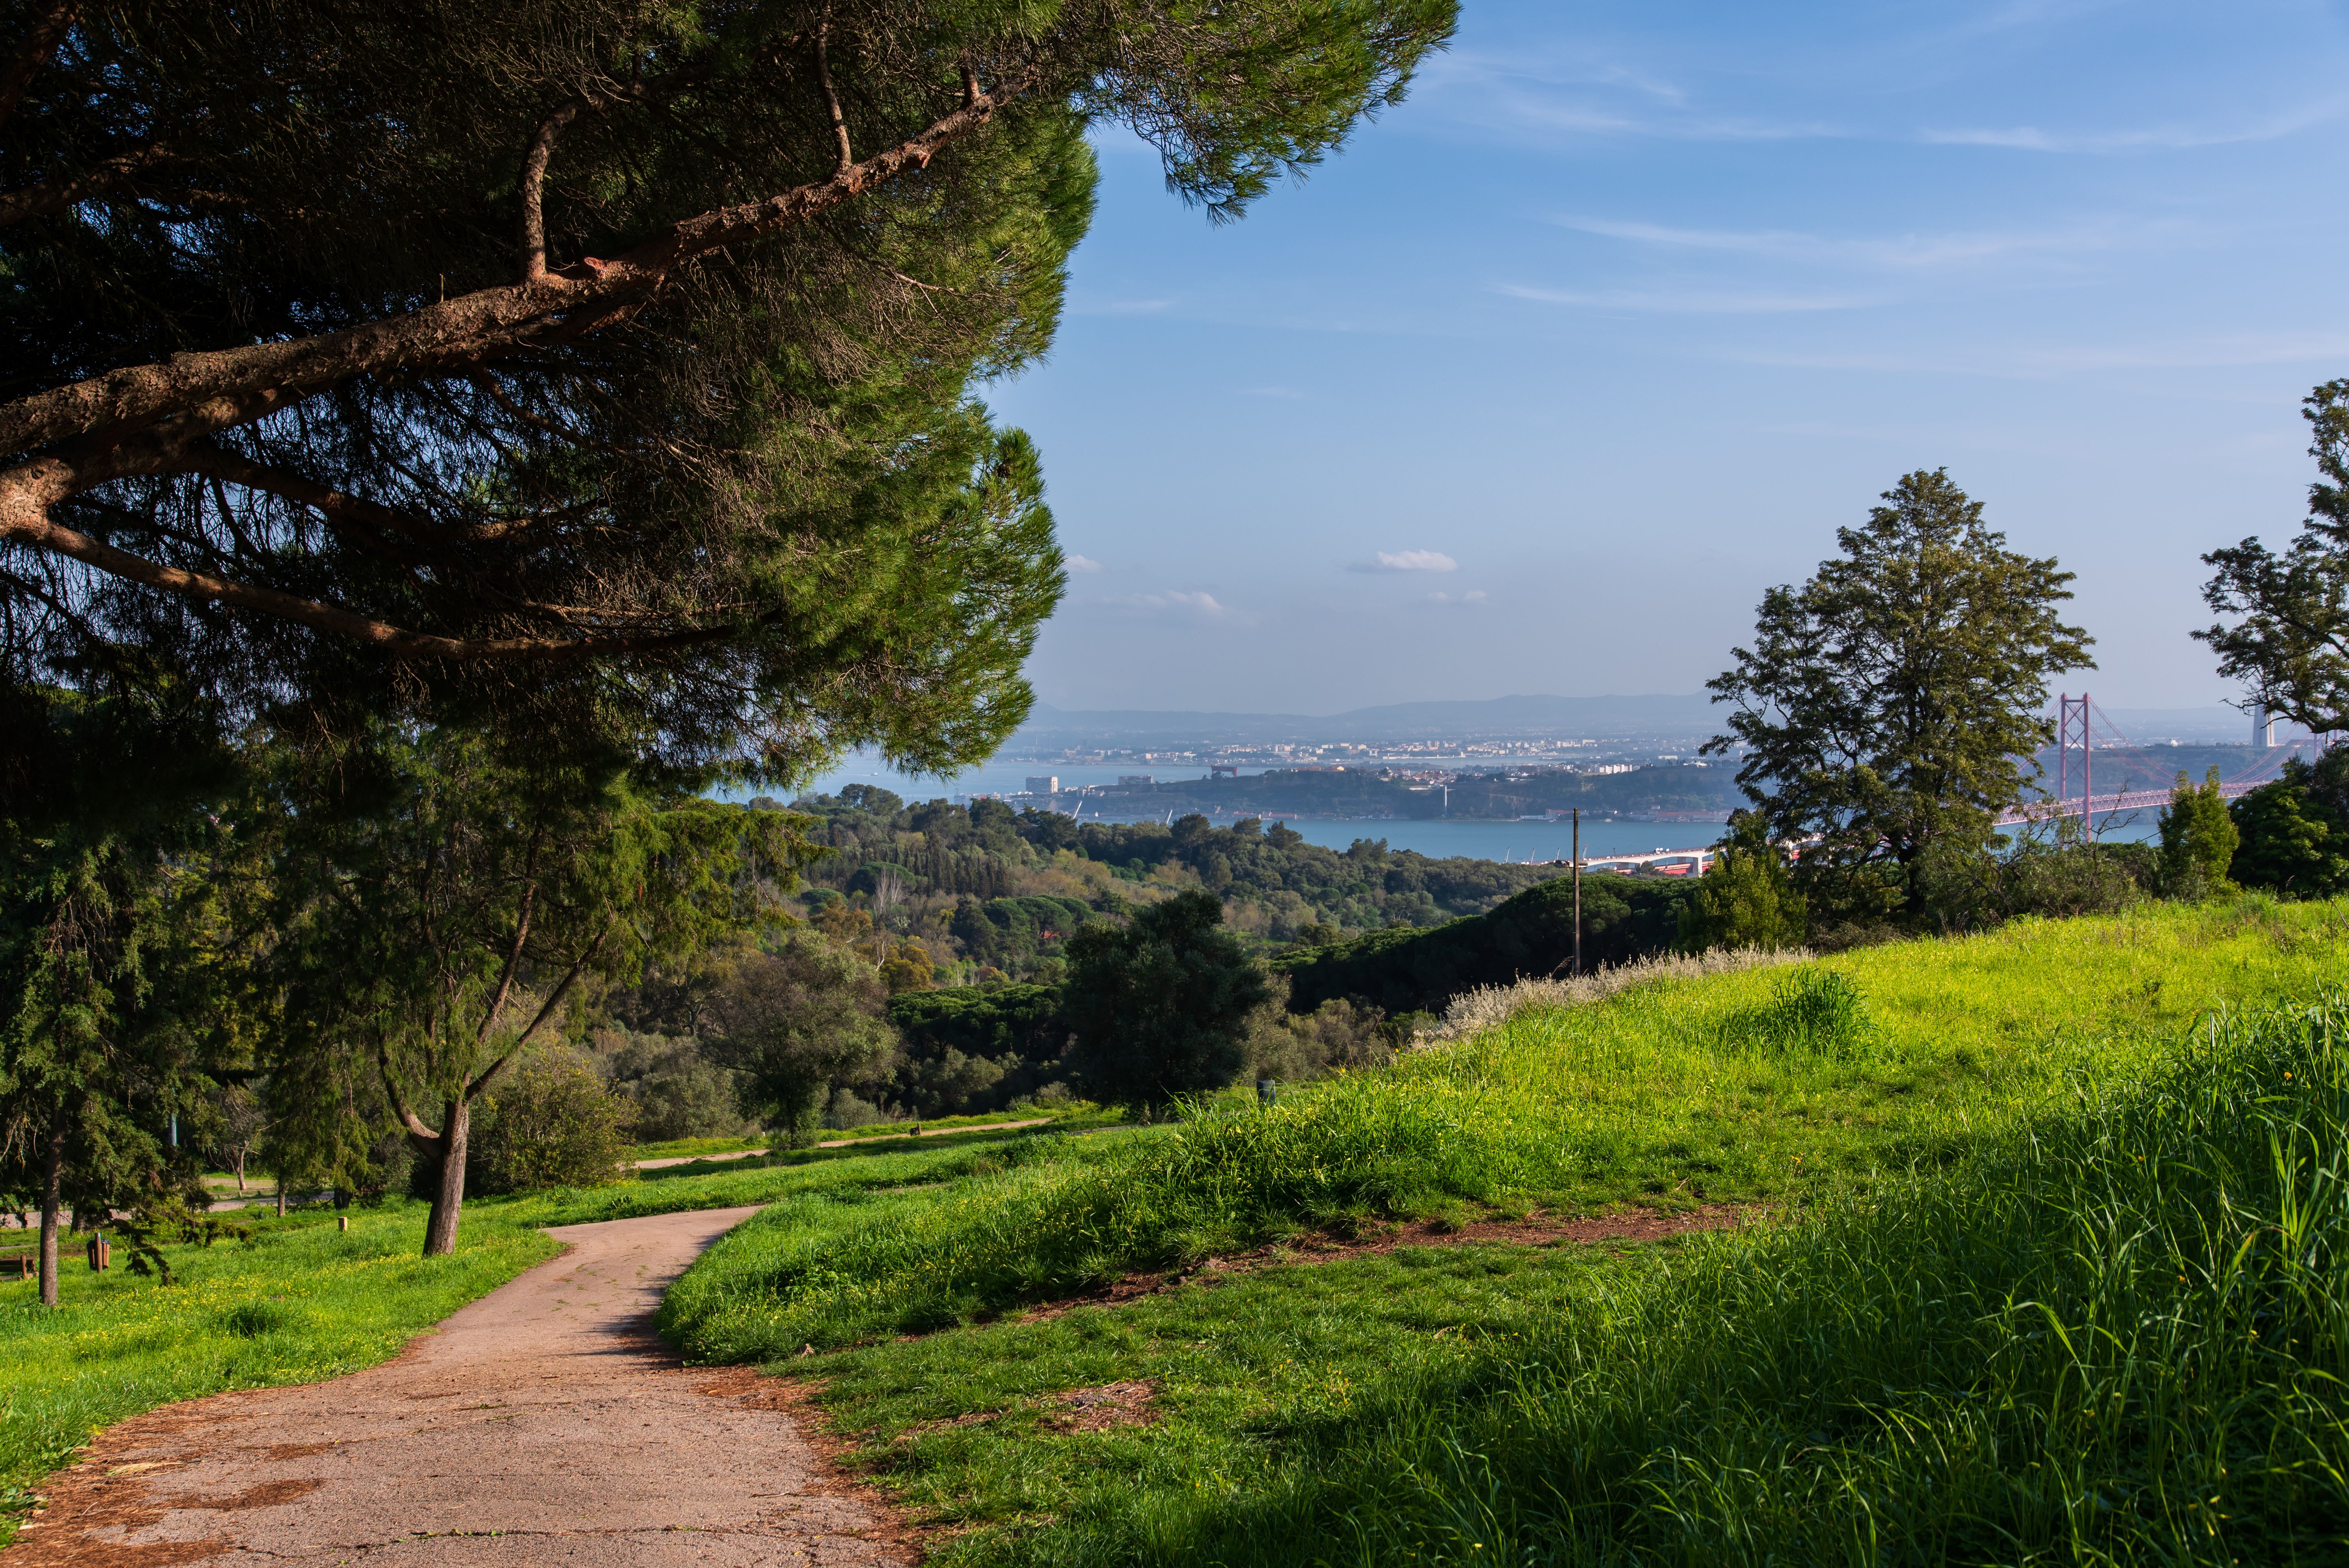 View of Monsanto Park in Lisbon, Monsanto park is the major green area in Lisbon.